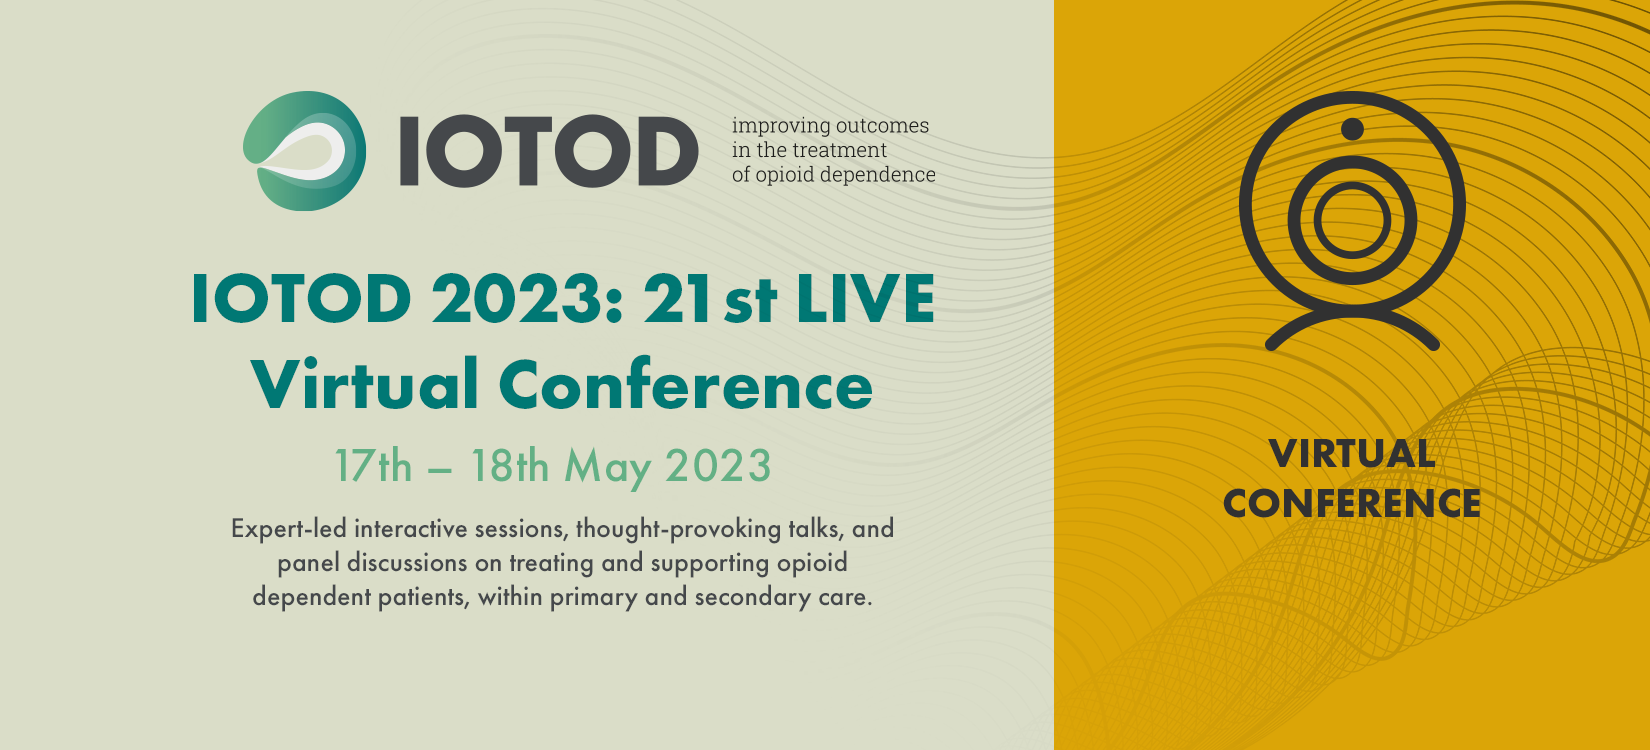 IOTOD 2023 virtual conference